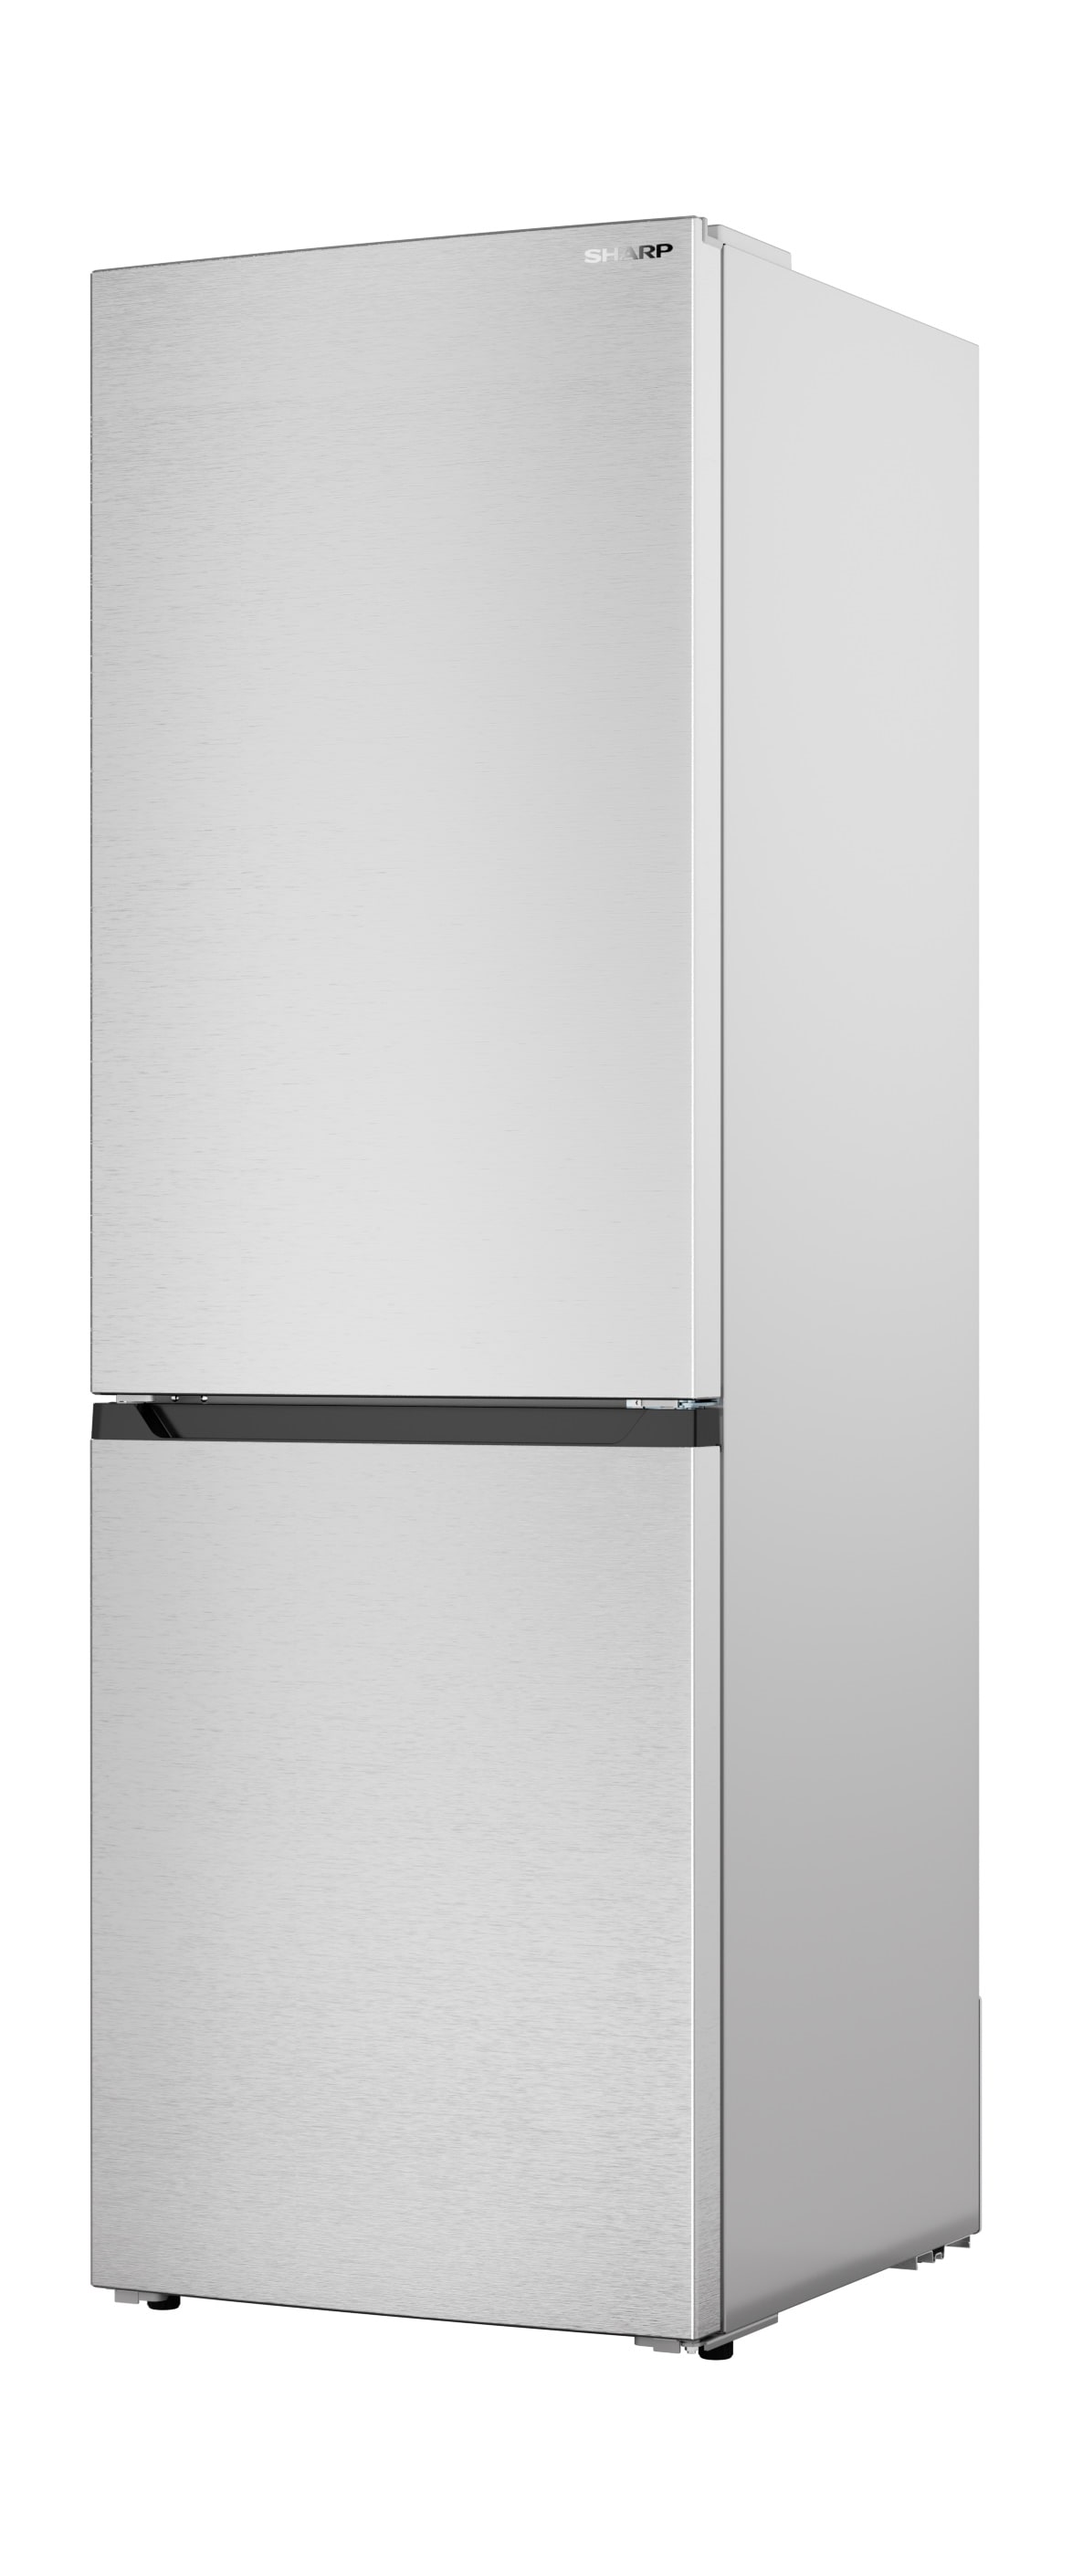 Refrigerators the Refrigerator department Steel) Bottom-Freezer in ft STAR Bottom-Freezer 11.5-cu (Stainless Sharp at ENERGY